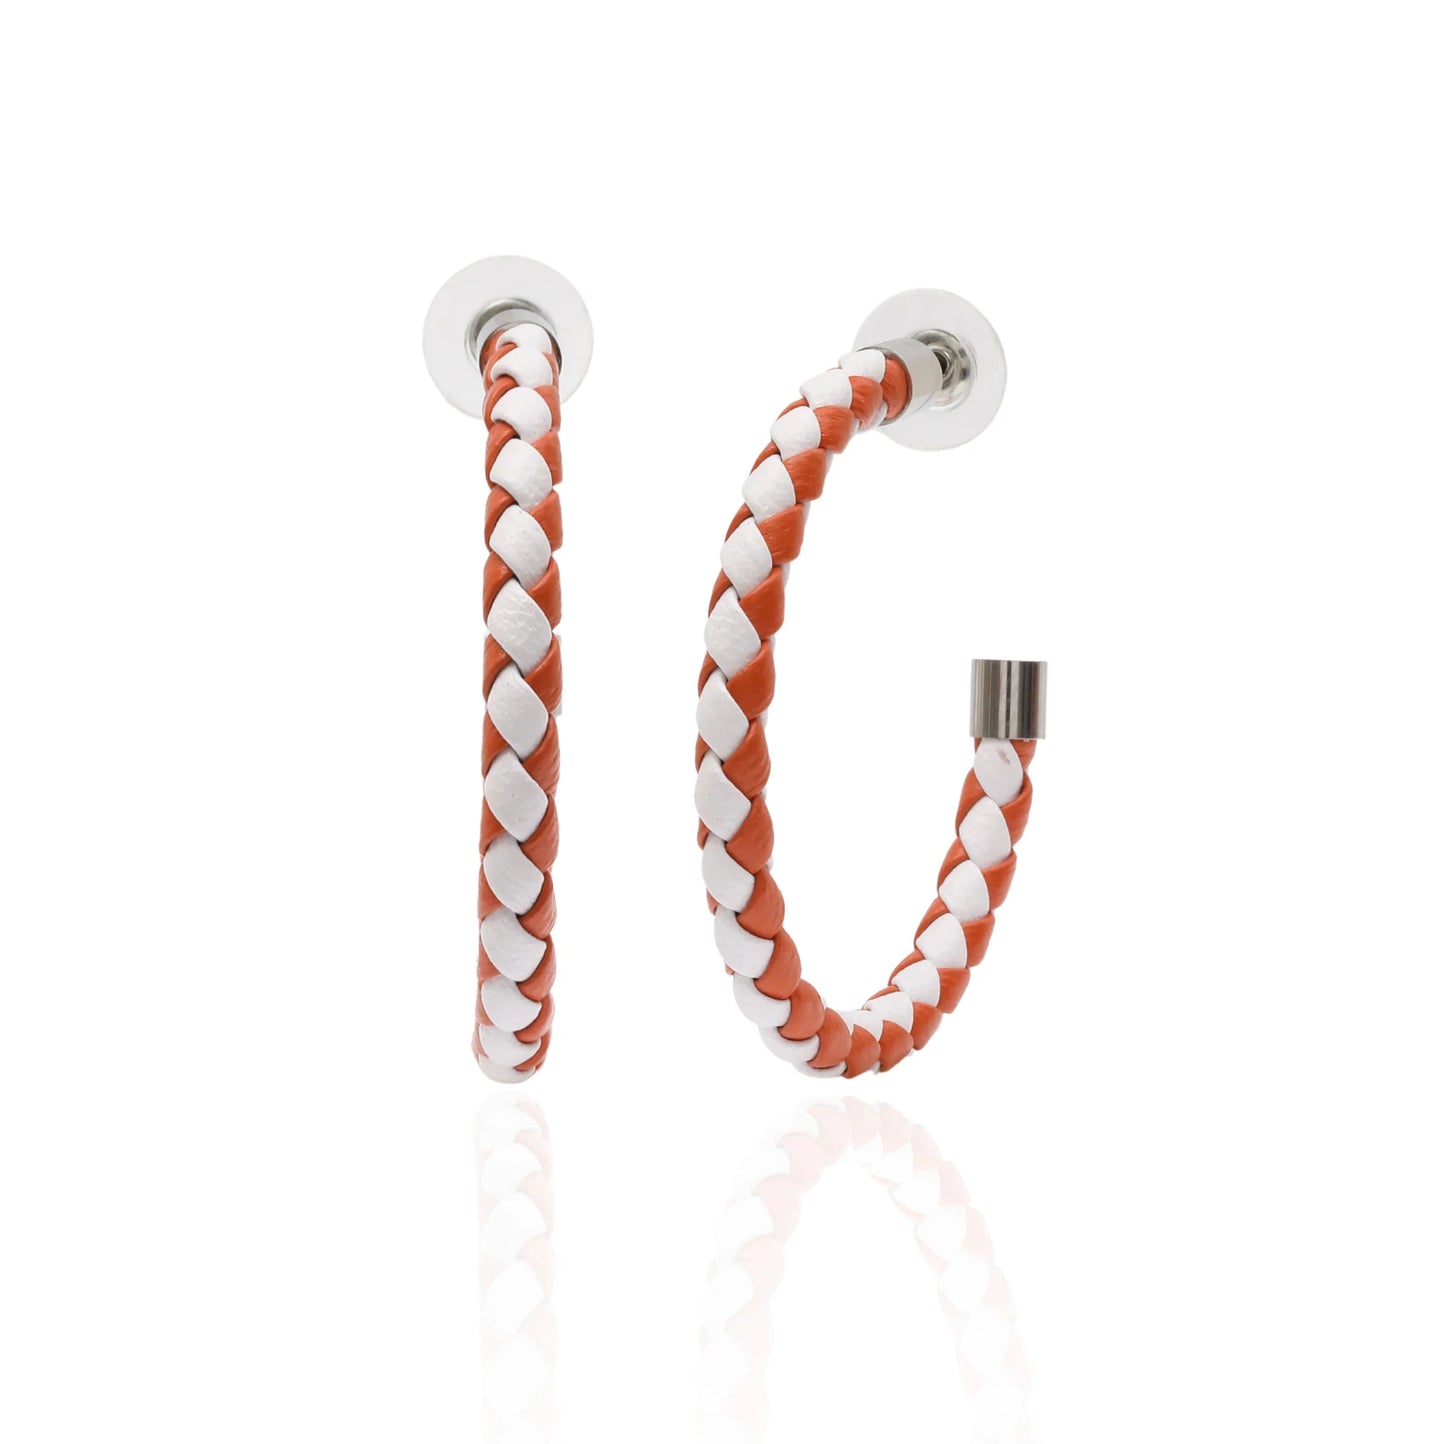 Earrings- Keva Orange and White Braided Hoops